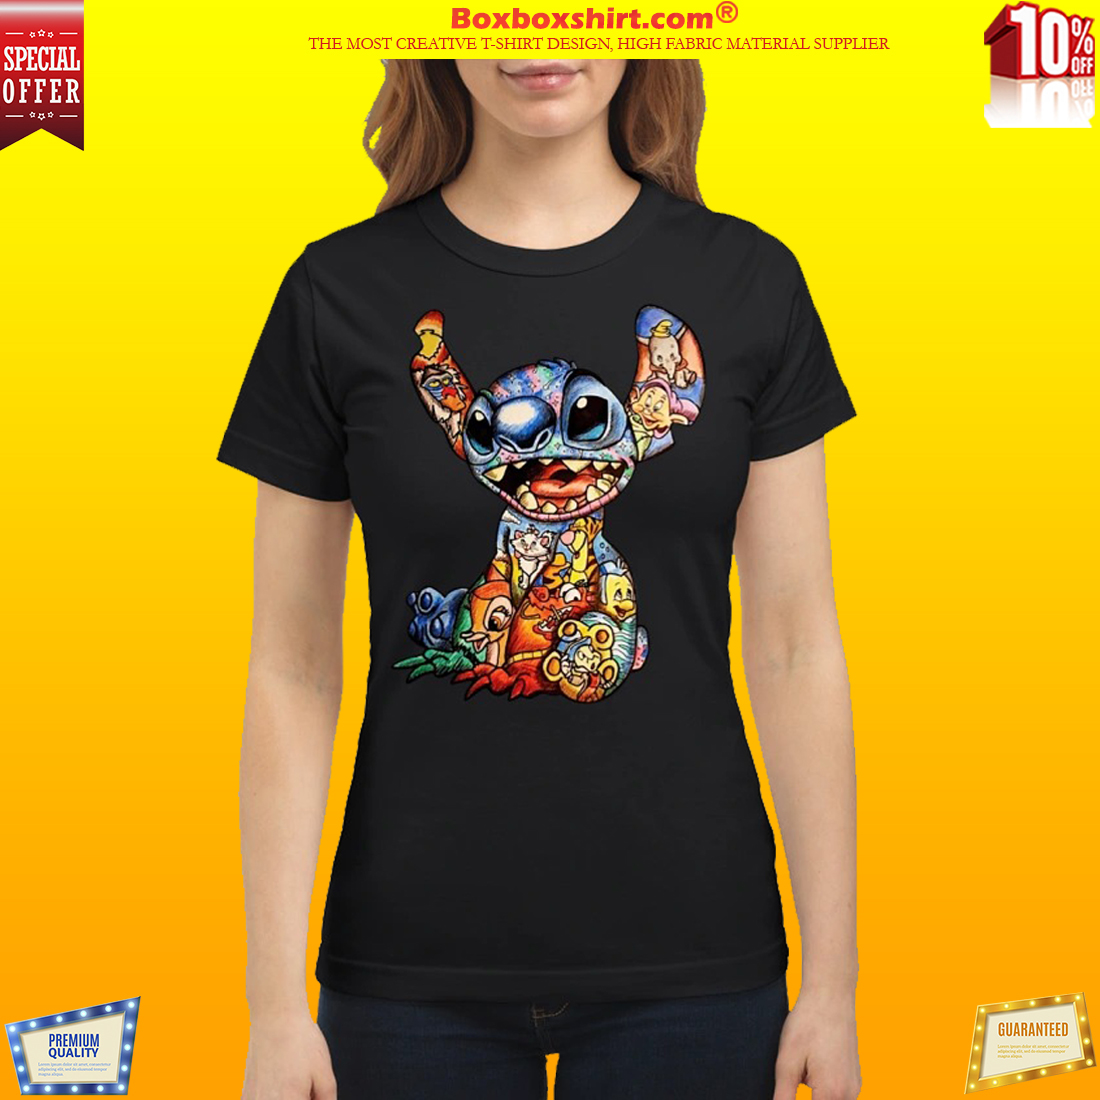 Stitch cartoon character pattern classic shirt